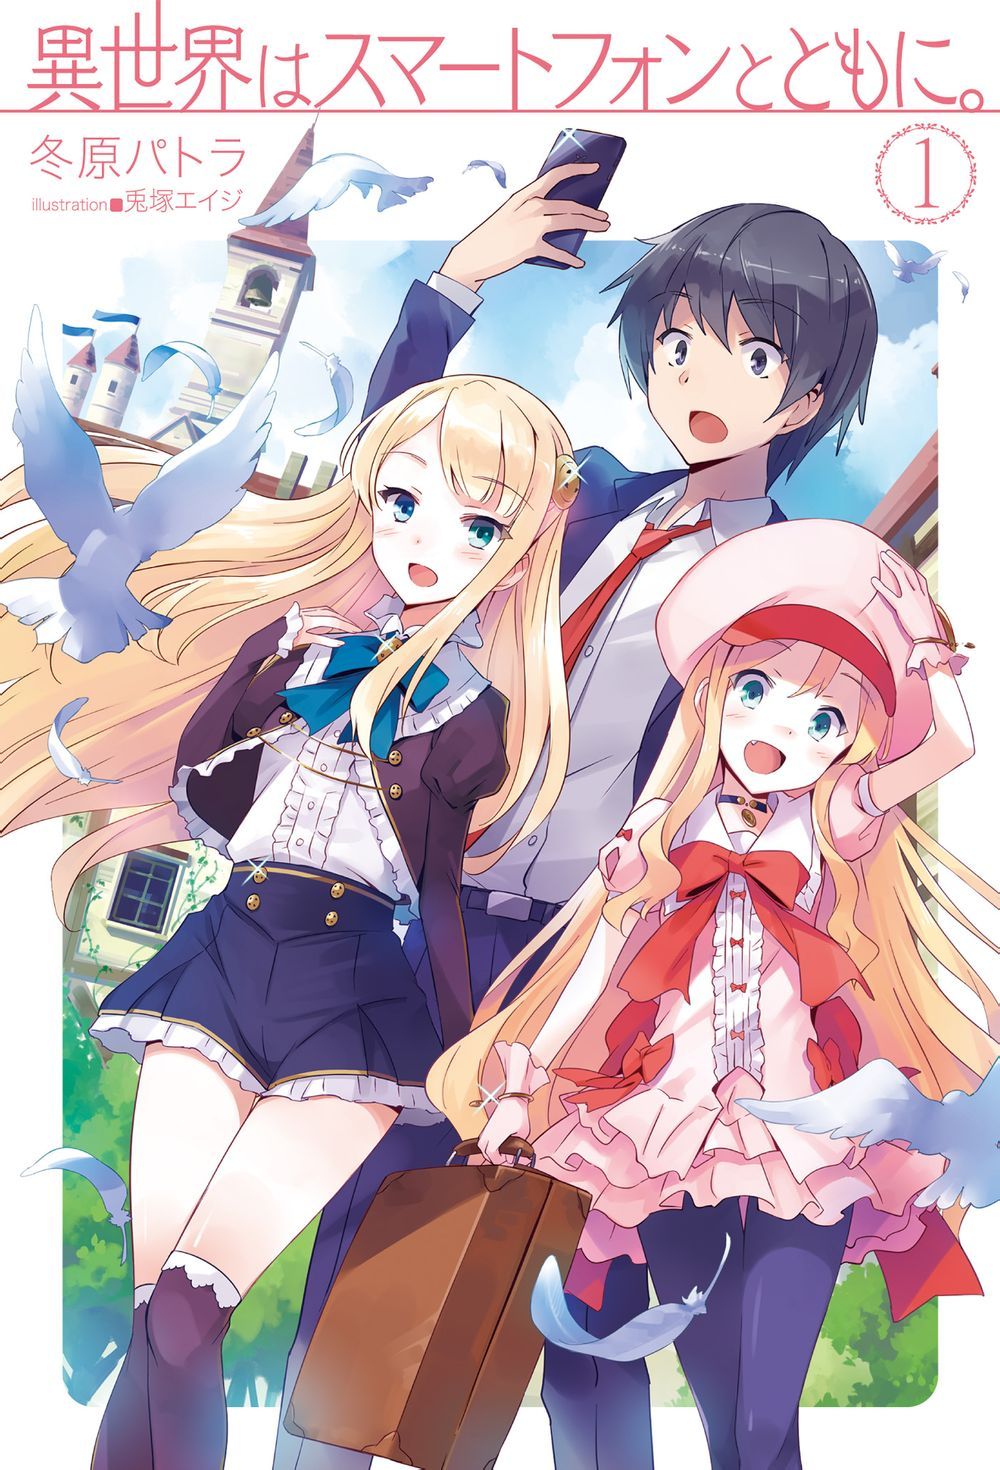 Isekai wa Smartphone to Tomoni Volume 1 Illustrations. Anime